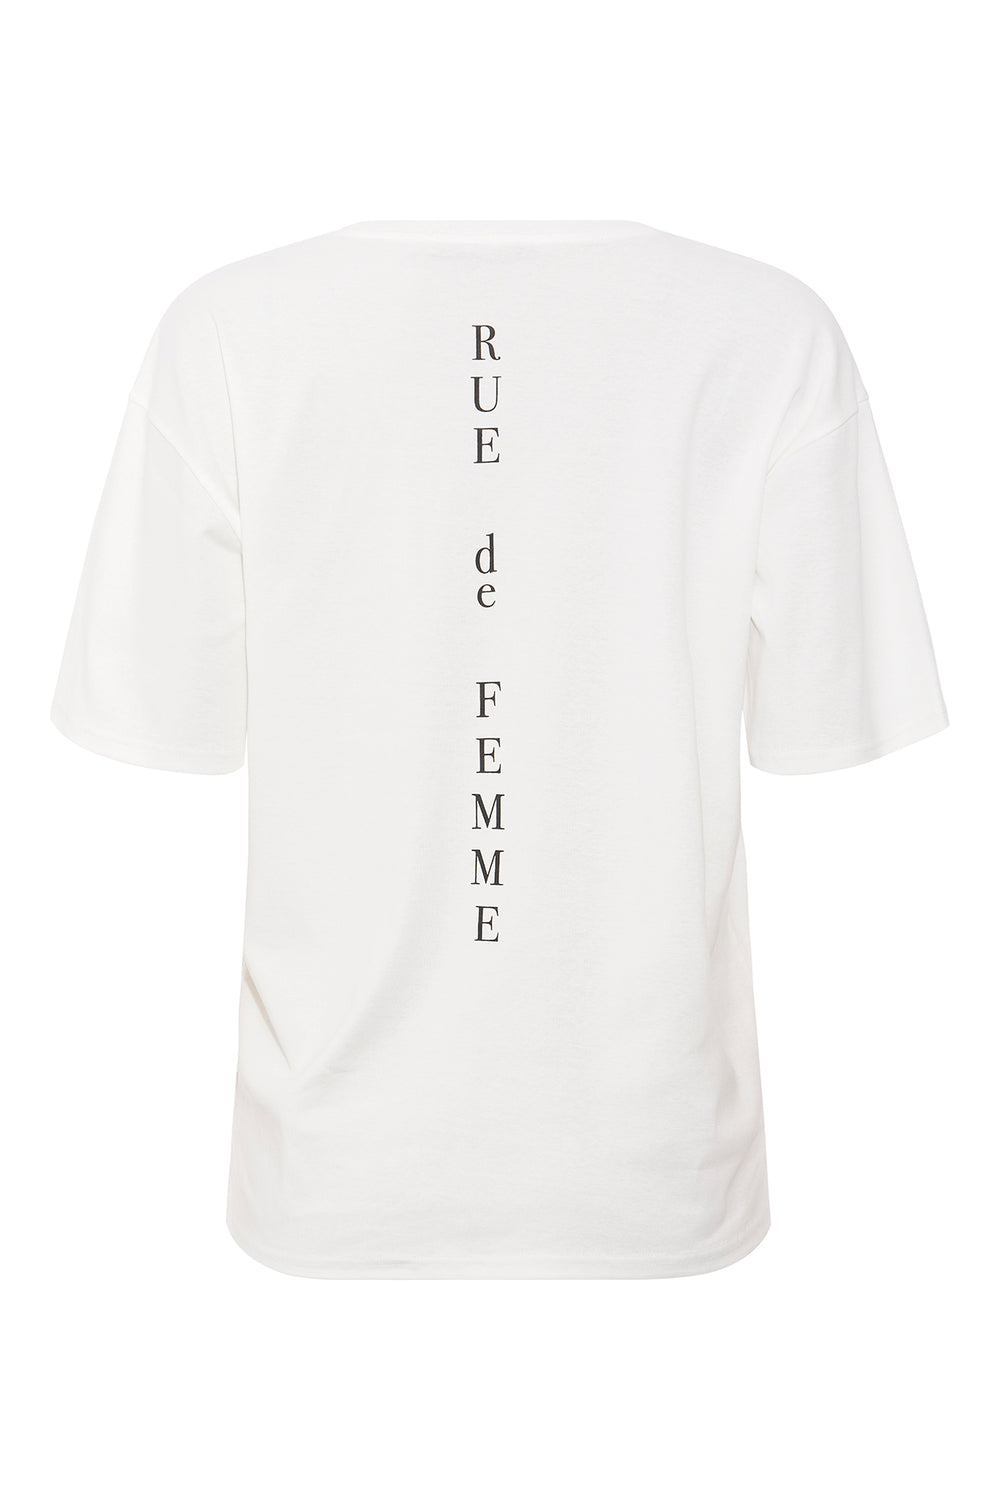 Rue de Femme Paloma t-shirt T-SHIRTS 02 Off white